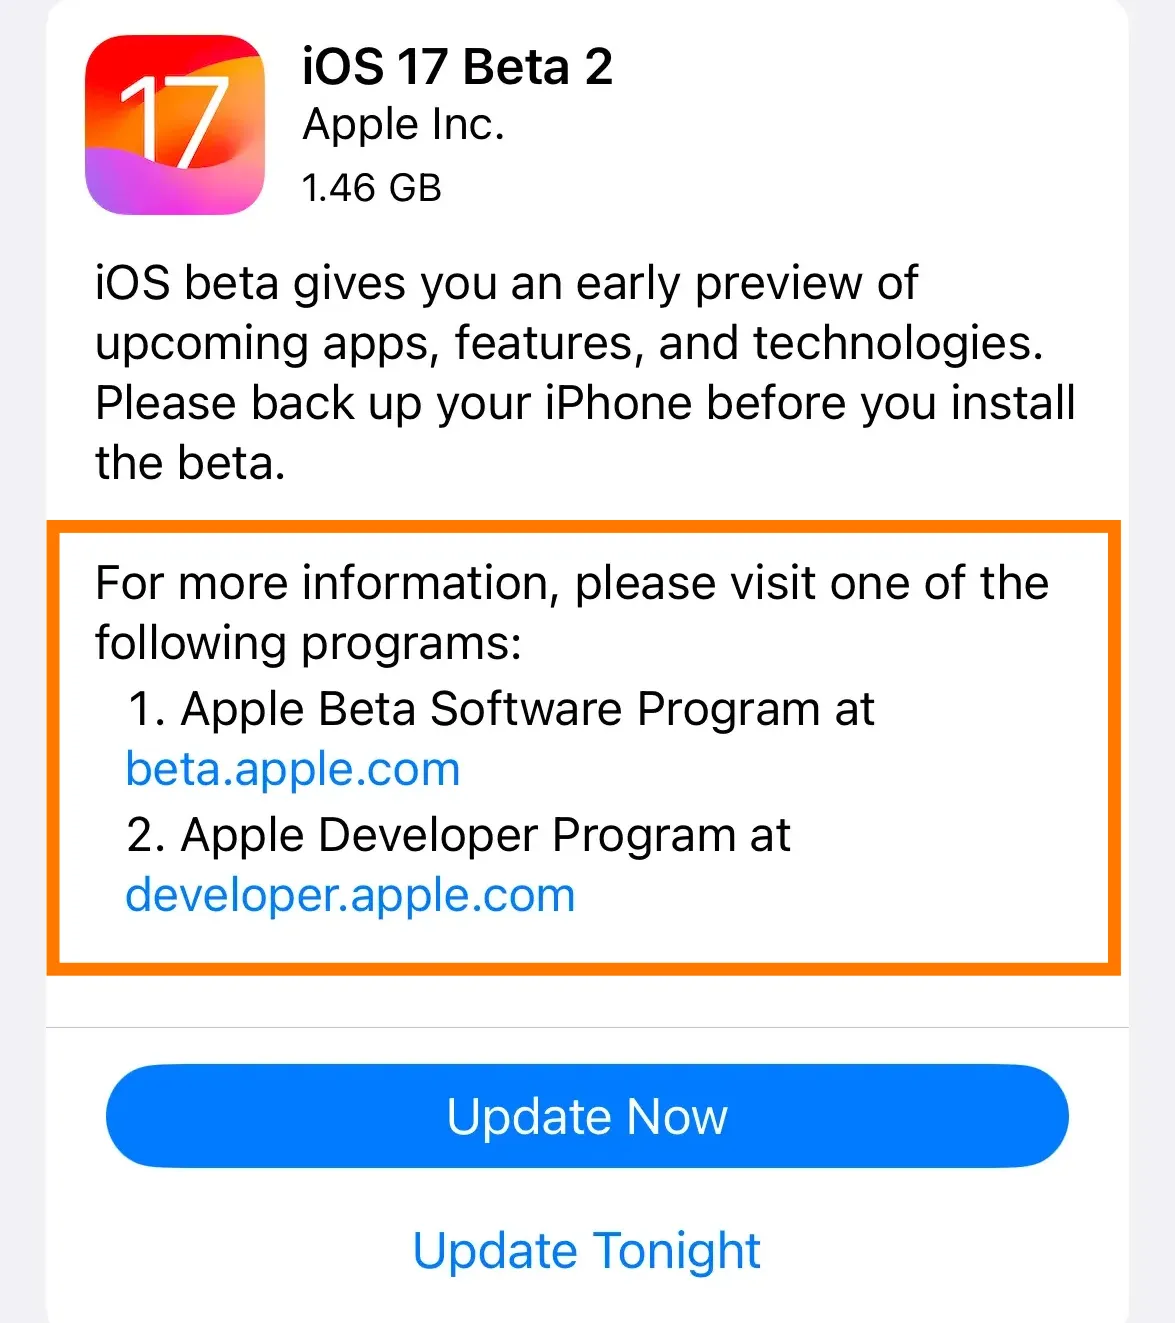 apple iphone ios17 update info display